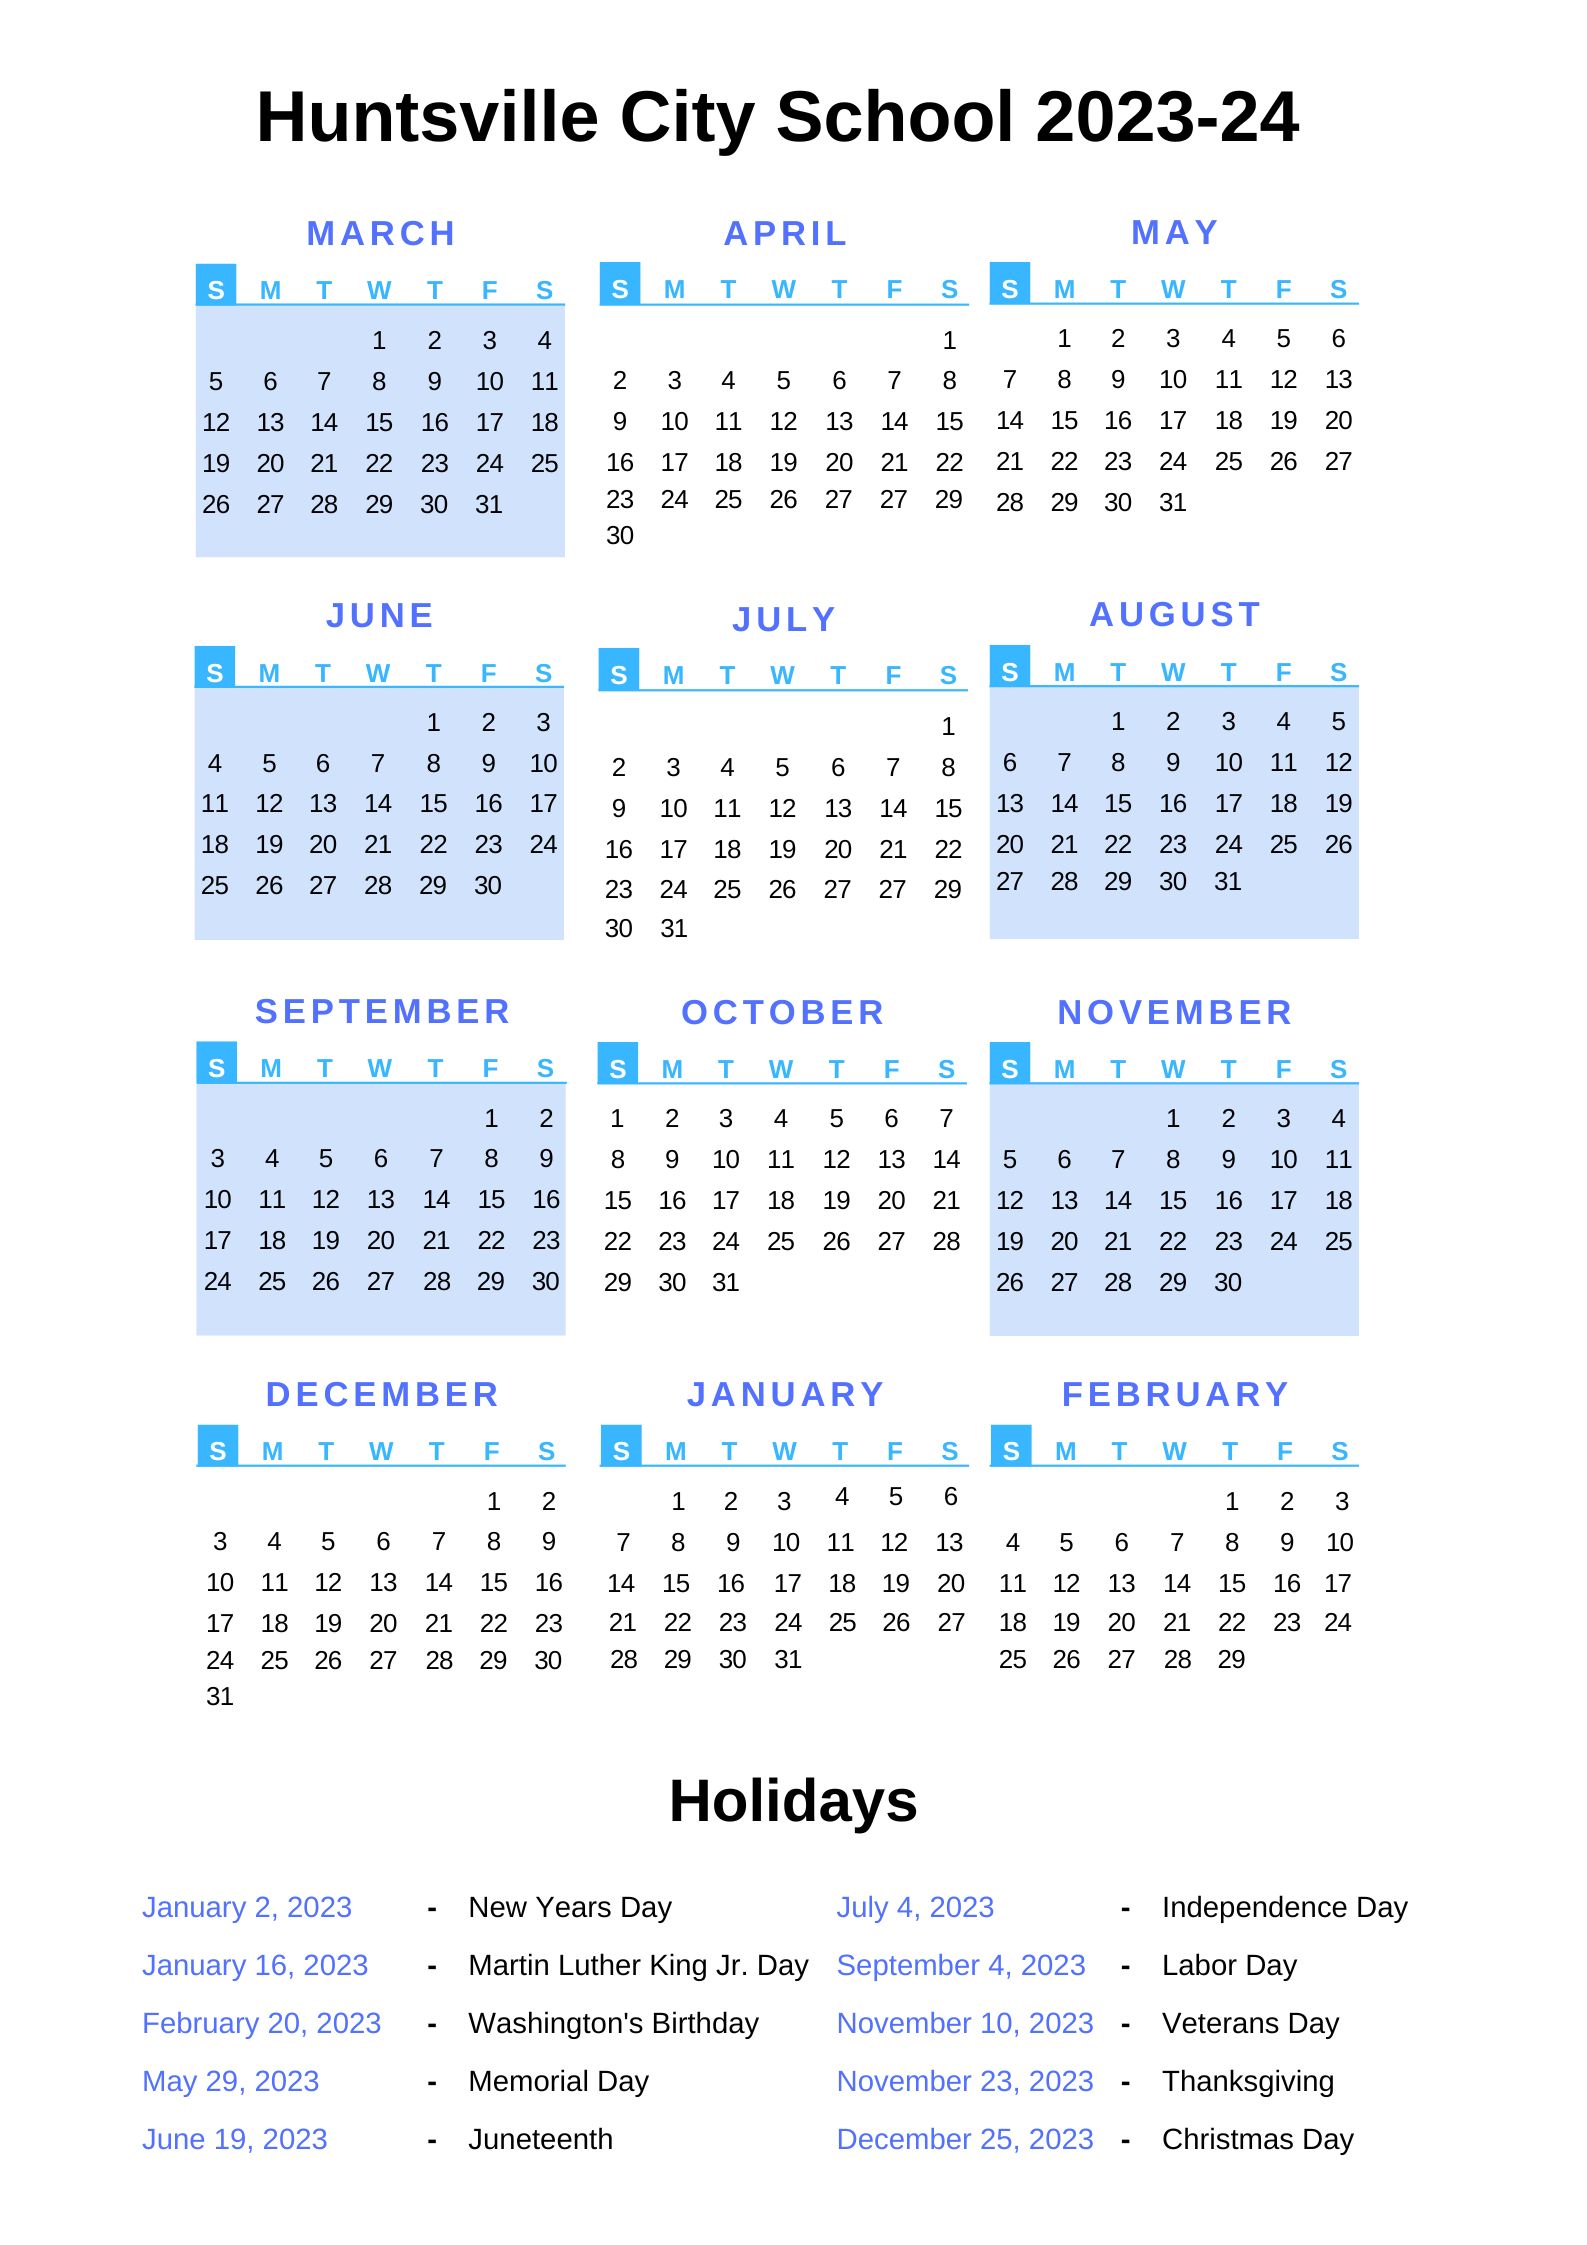 Huntsville City Schools Calendar 202324 With Holidays